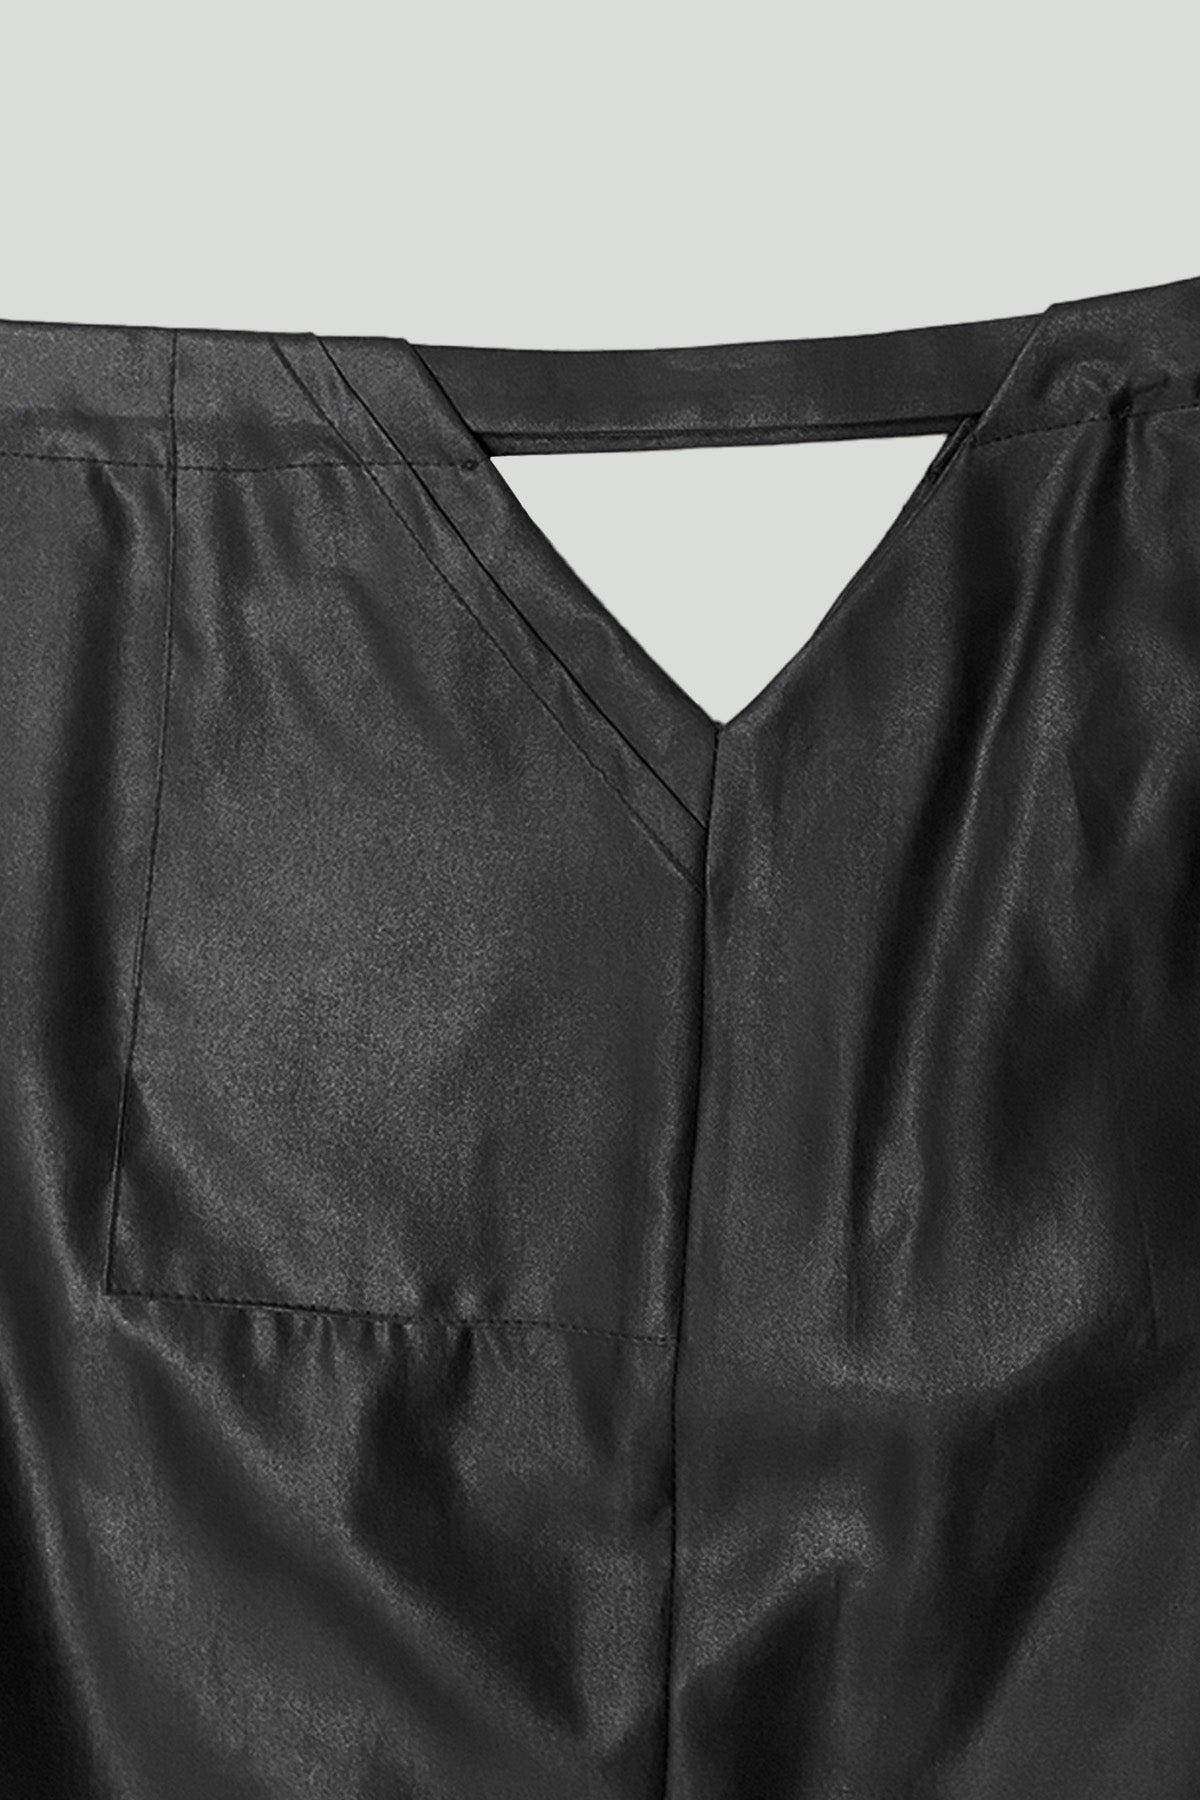 Lightweight Black Leather Flared Elastic Waist Pant